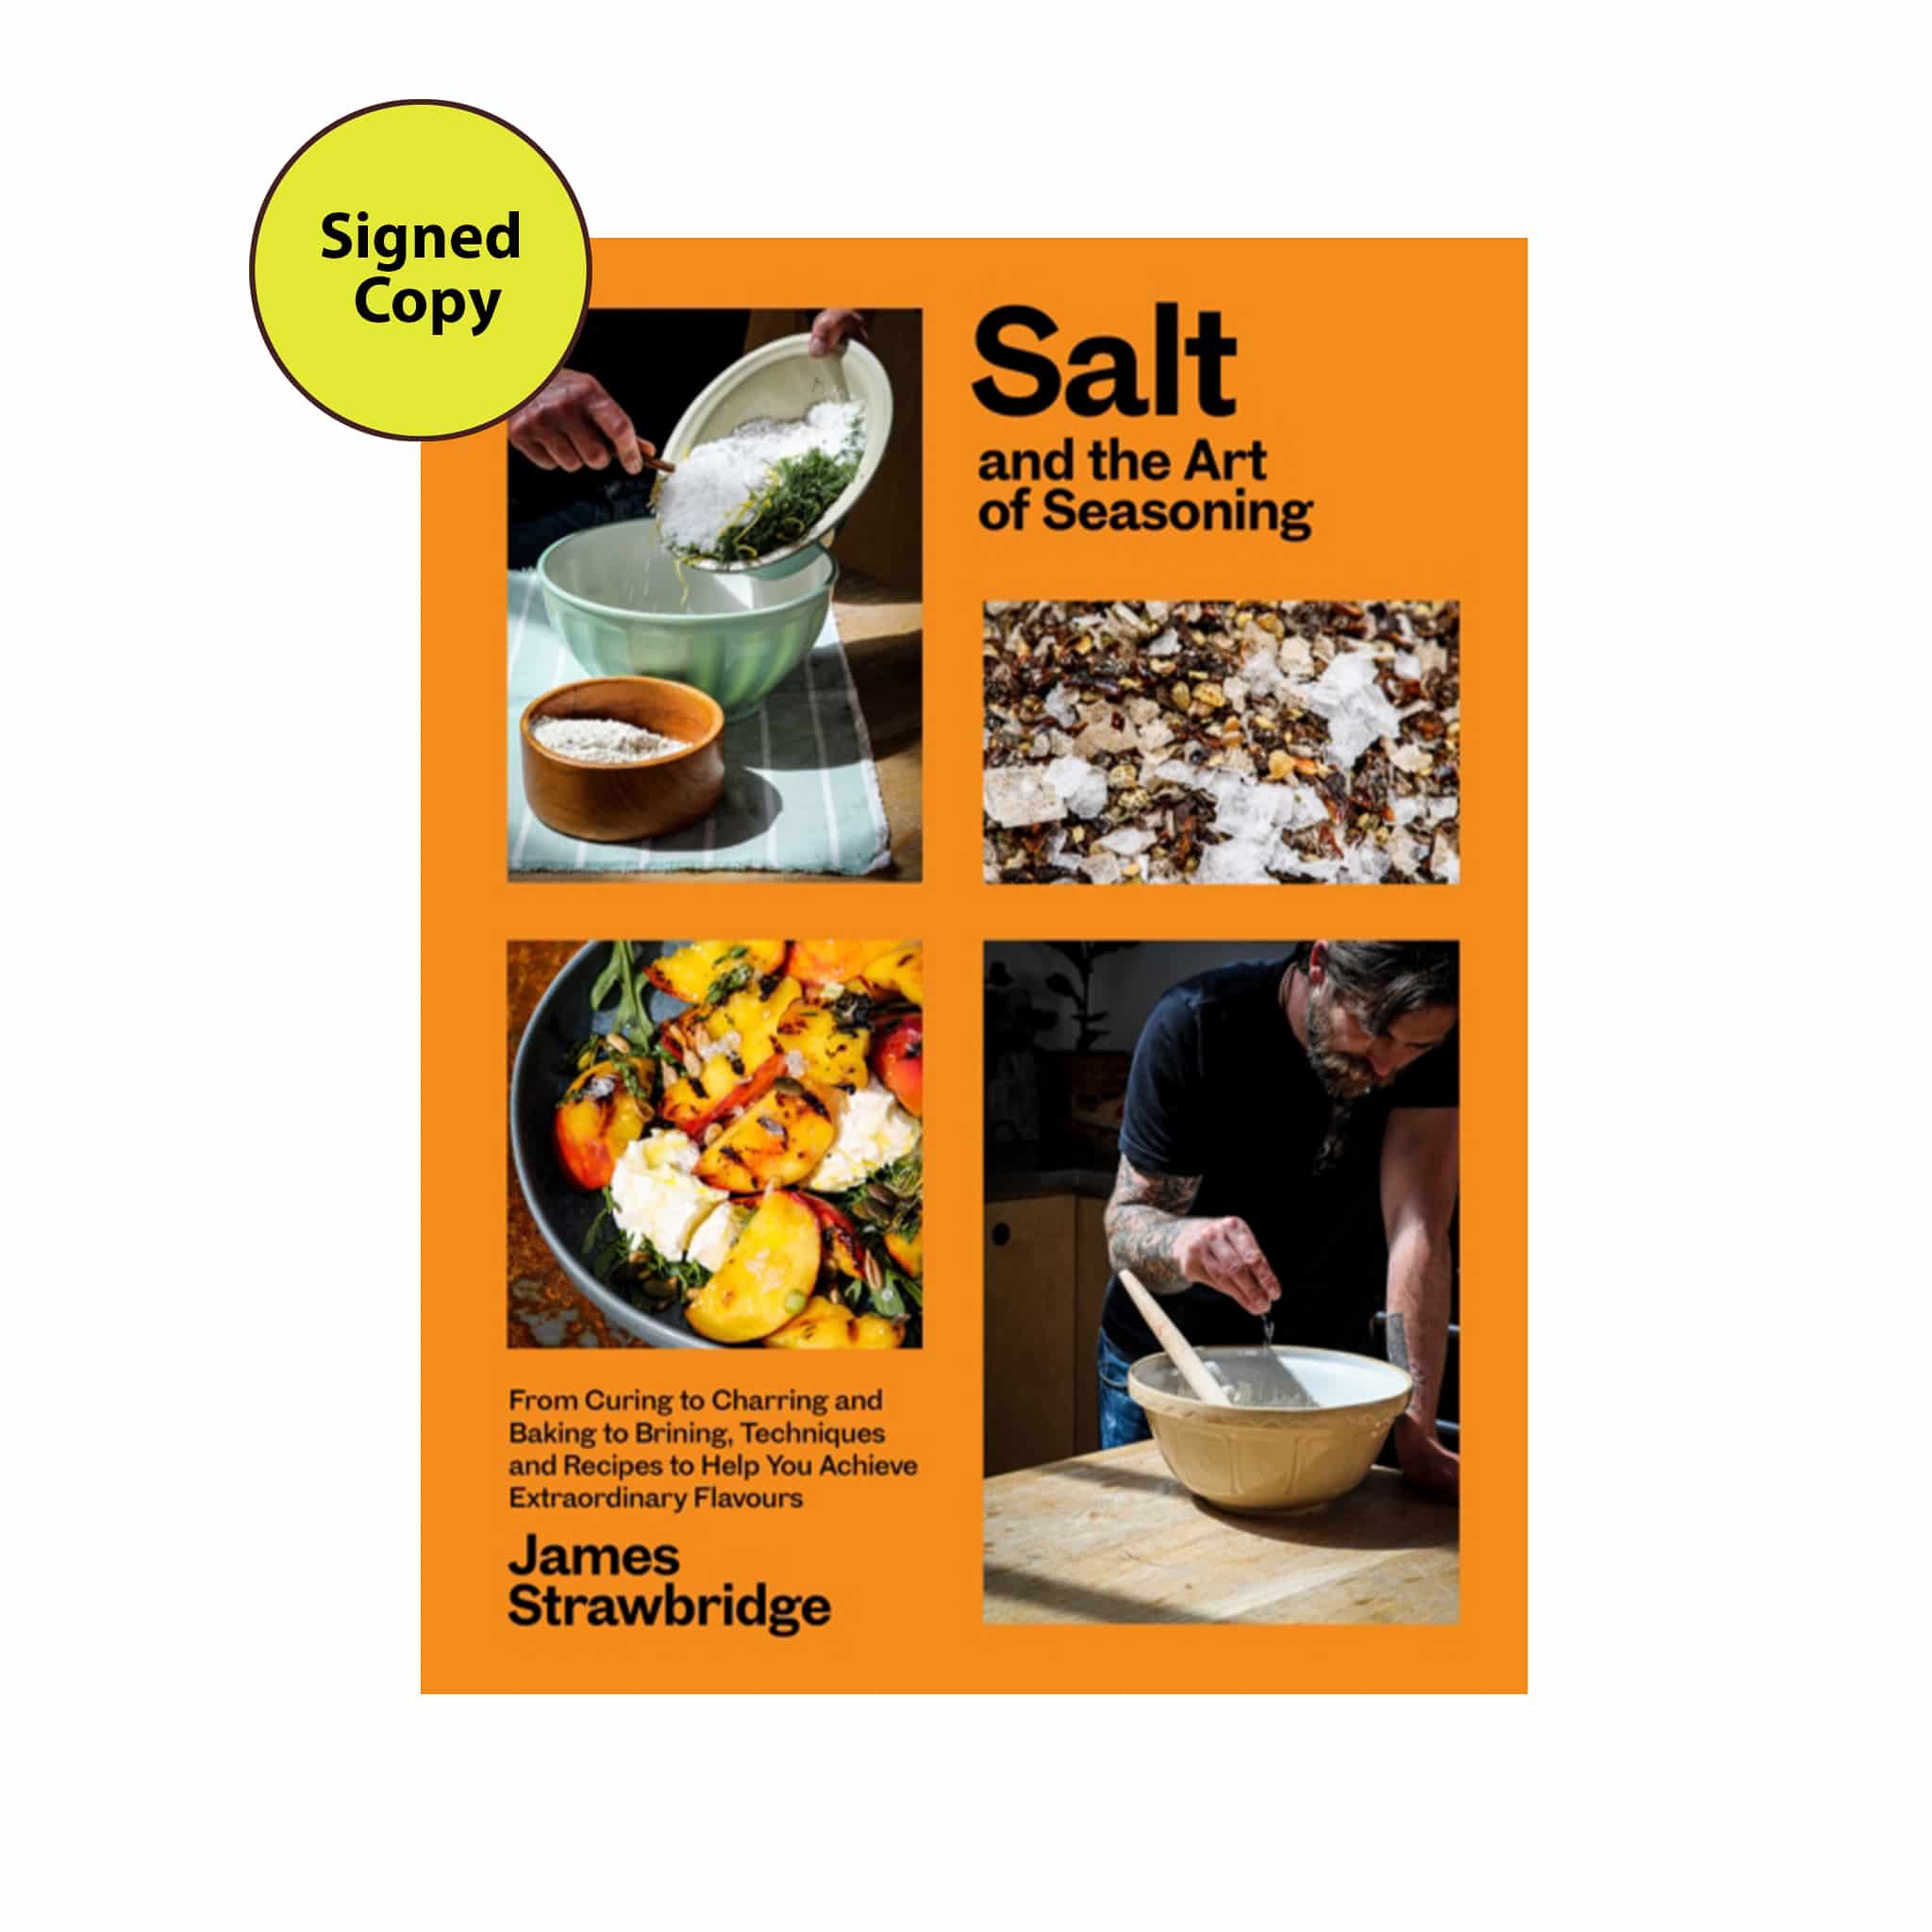 Salt & The Art of Seasoning by James Strawbridge, Signed Copy